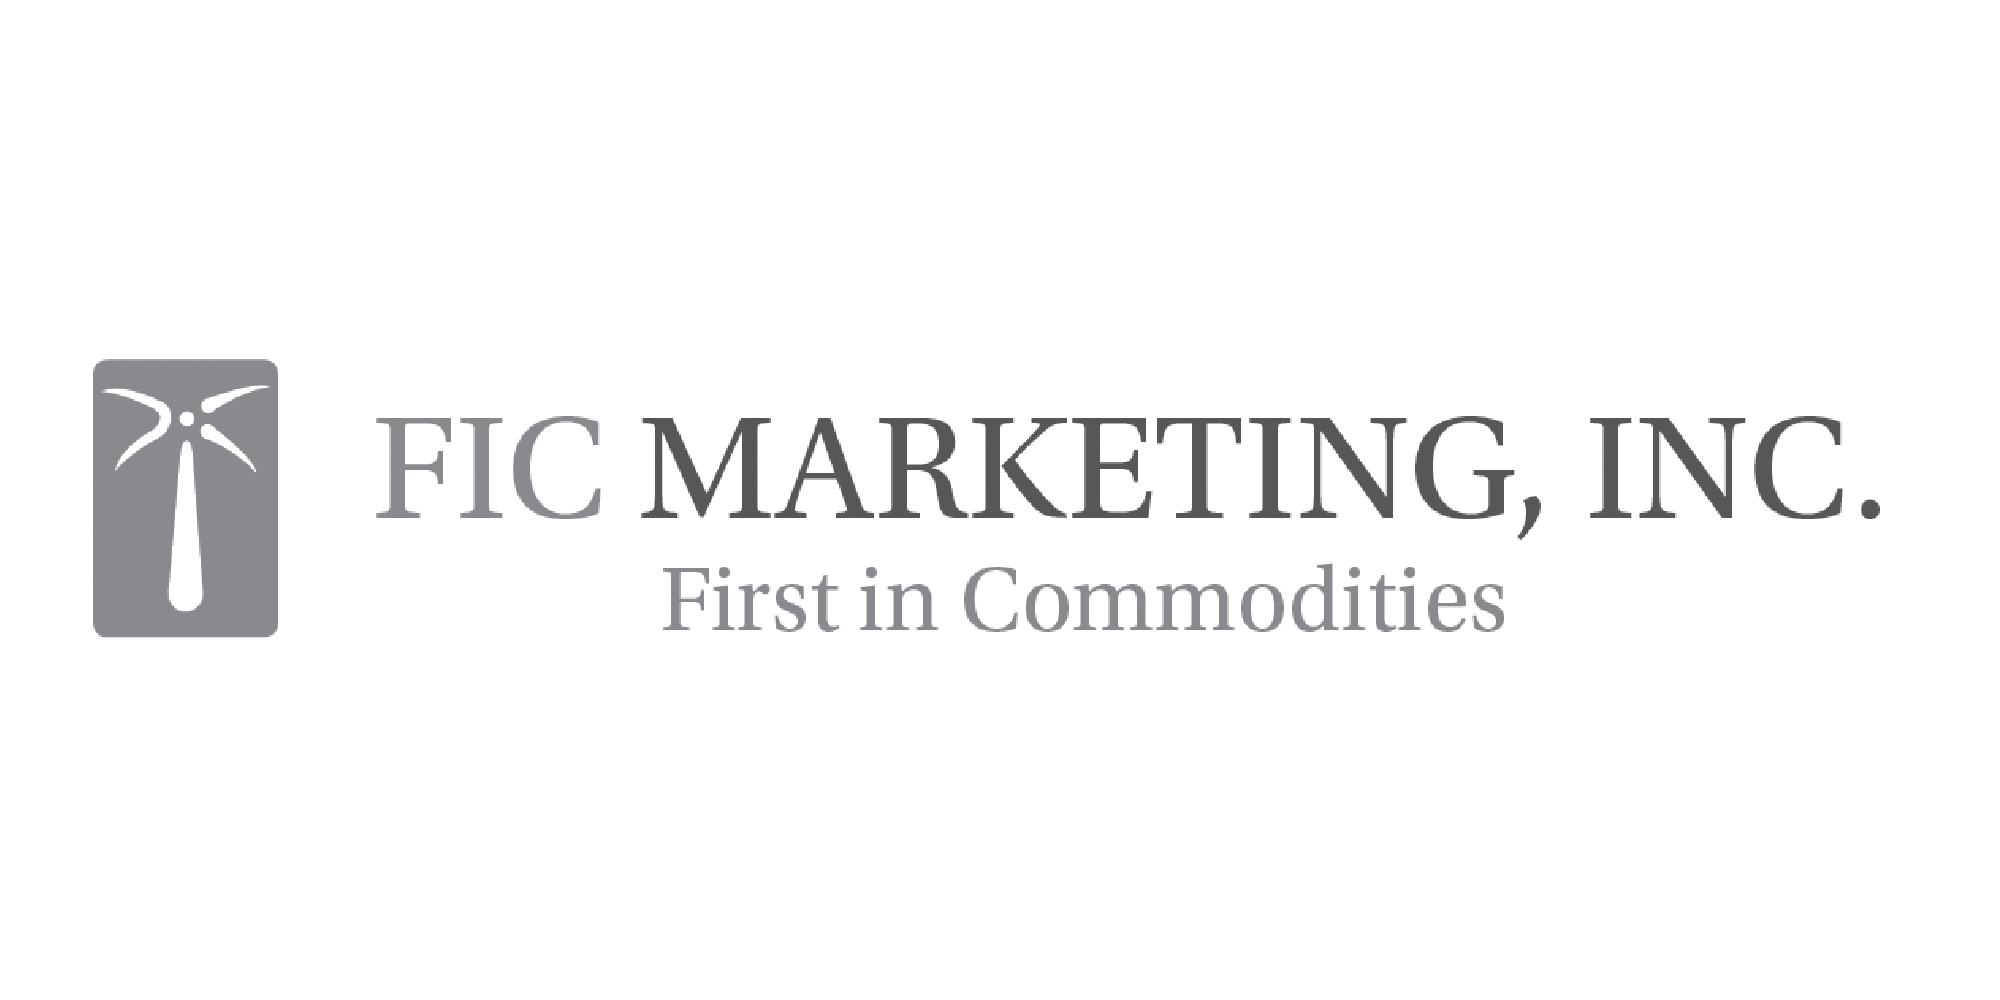 FIC Marketing, INC gray logo